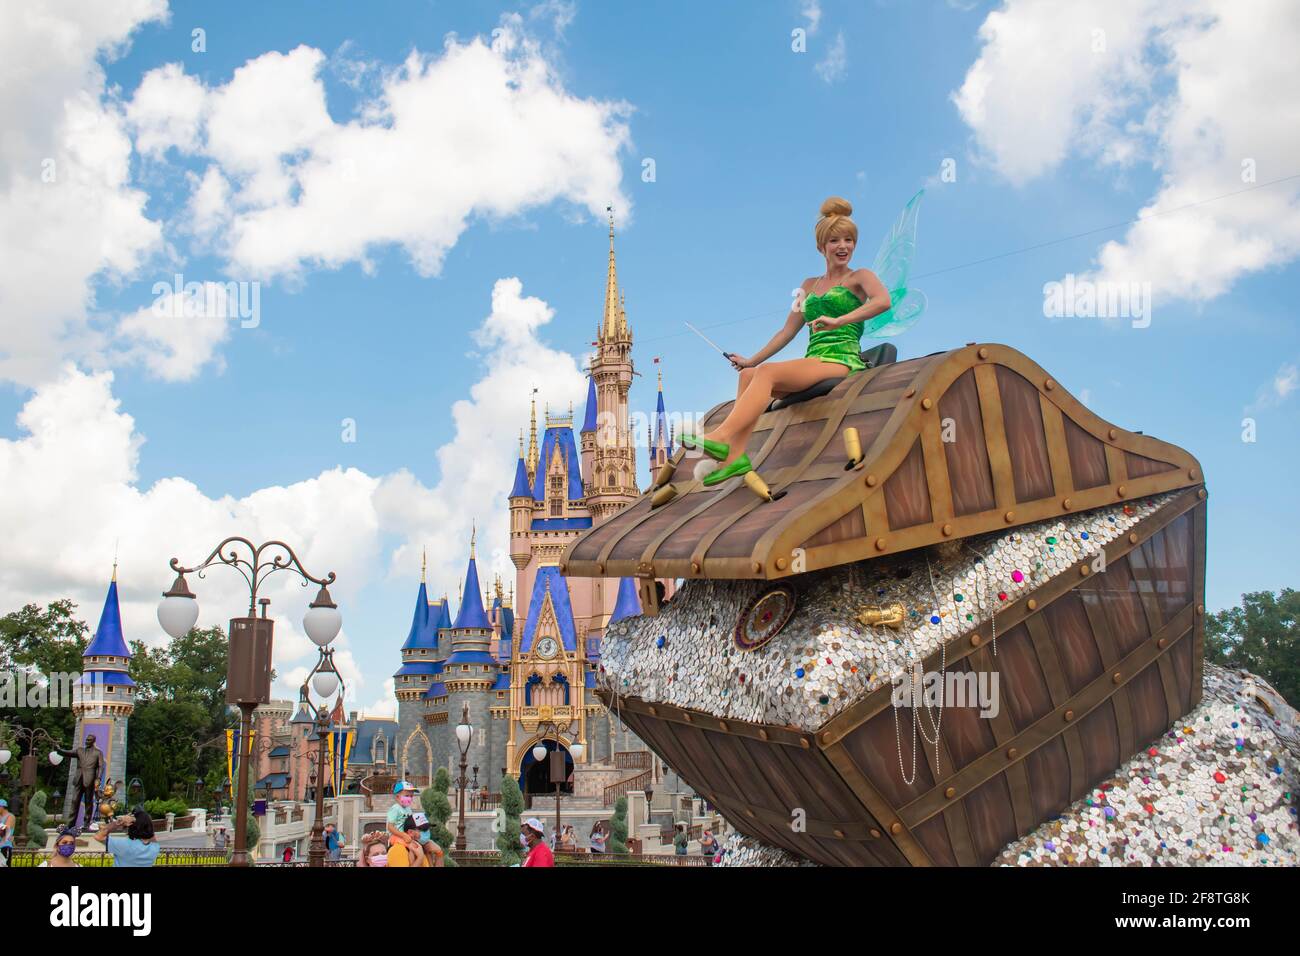 Orlando, Florida. September 02, 2020. Tinker Bell on beautiful parade float at Magic Kingdom (370) Stock Photo